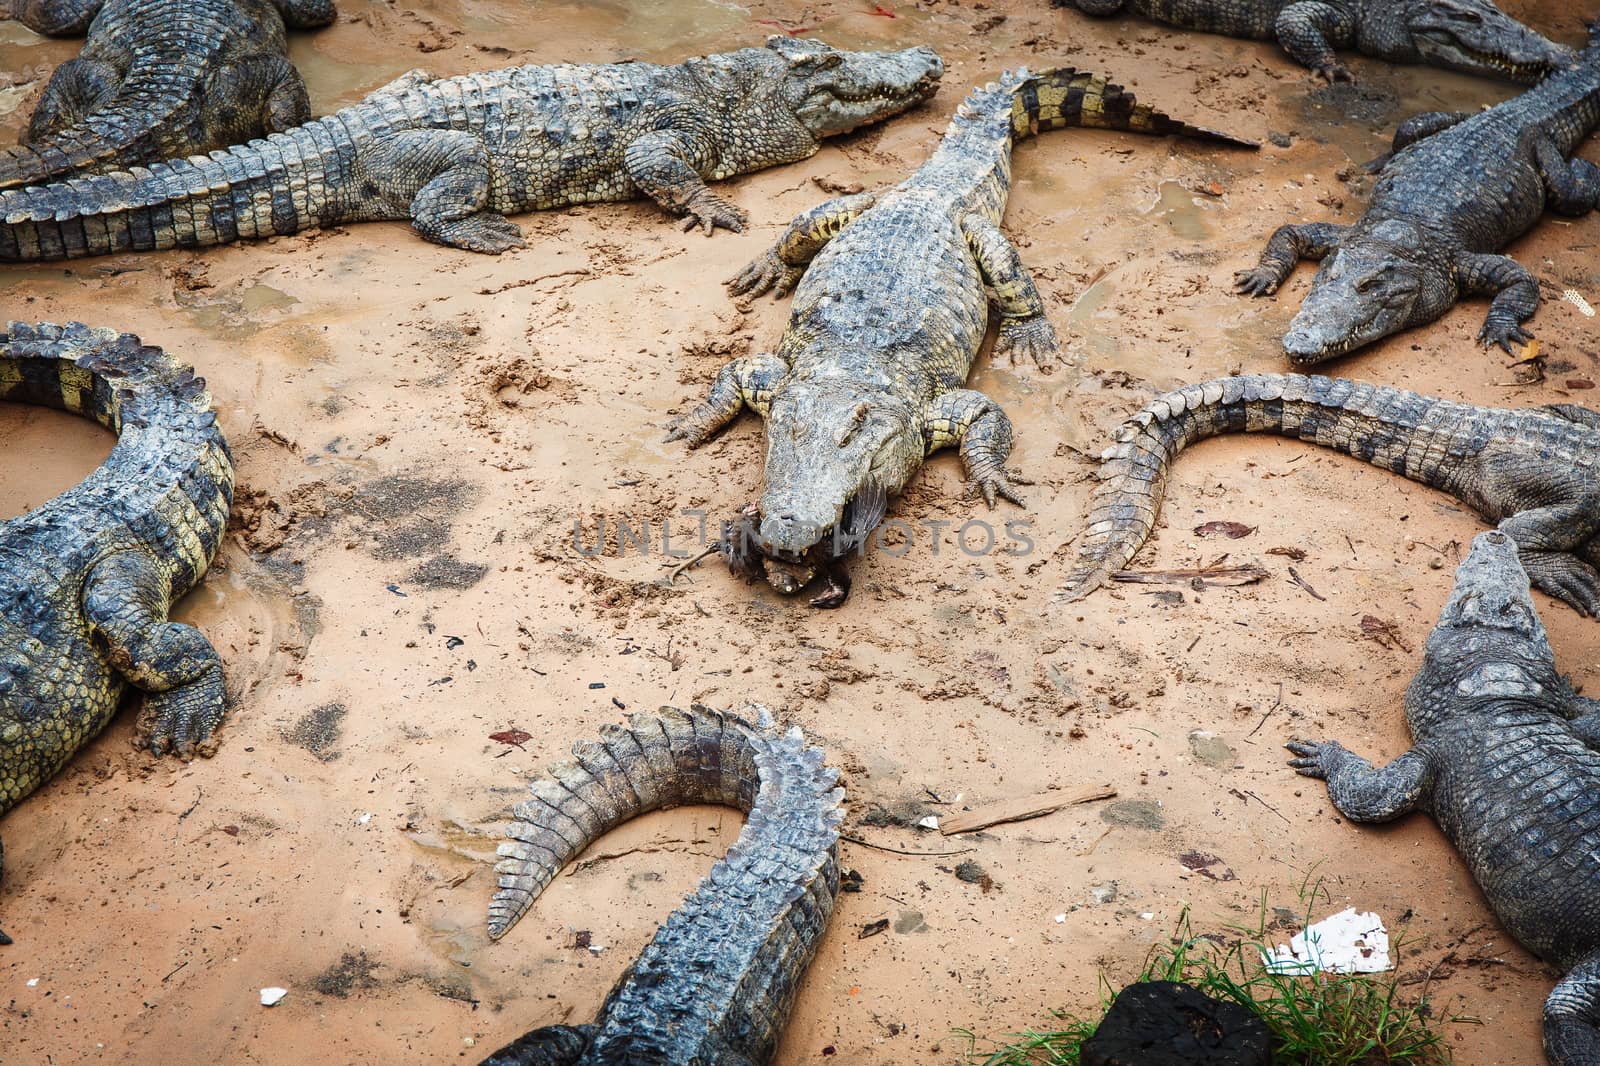 Large crocodiles in Cambodia by gorov108